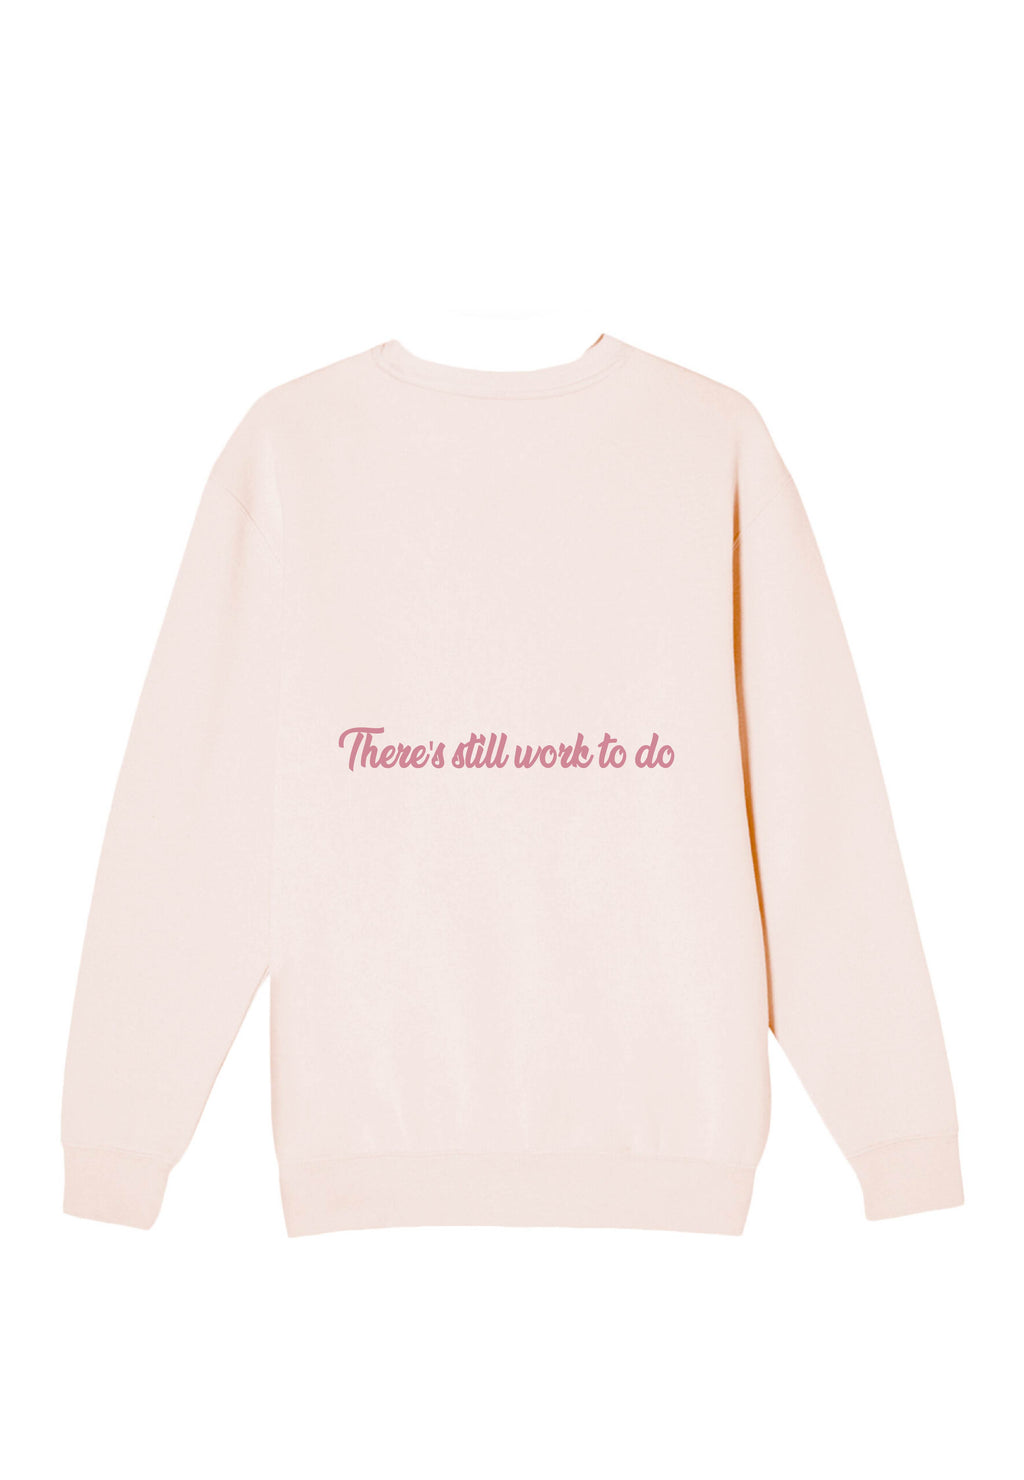 Doing the damn thing - Pale Pink Sweatshirt